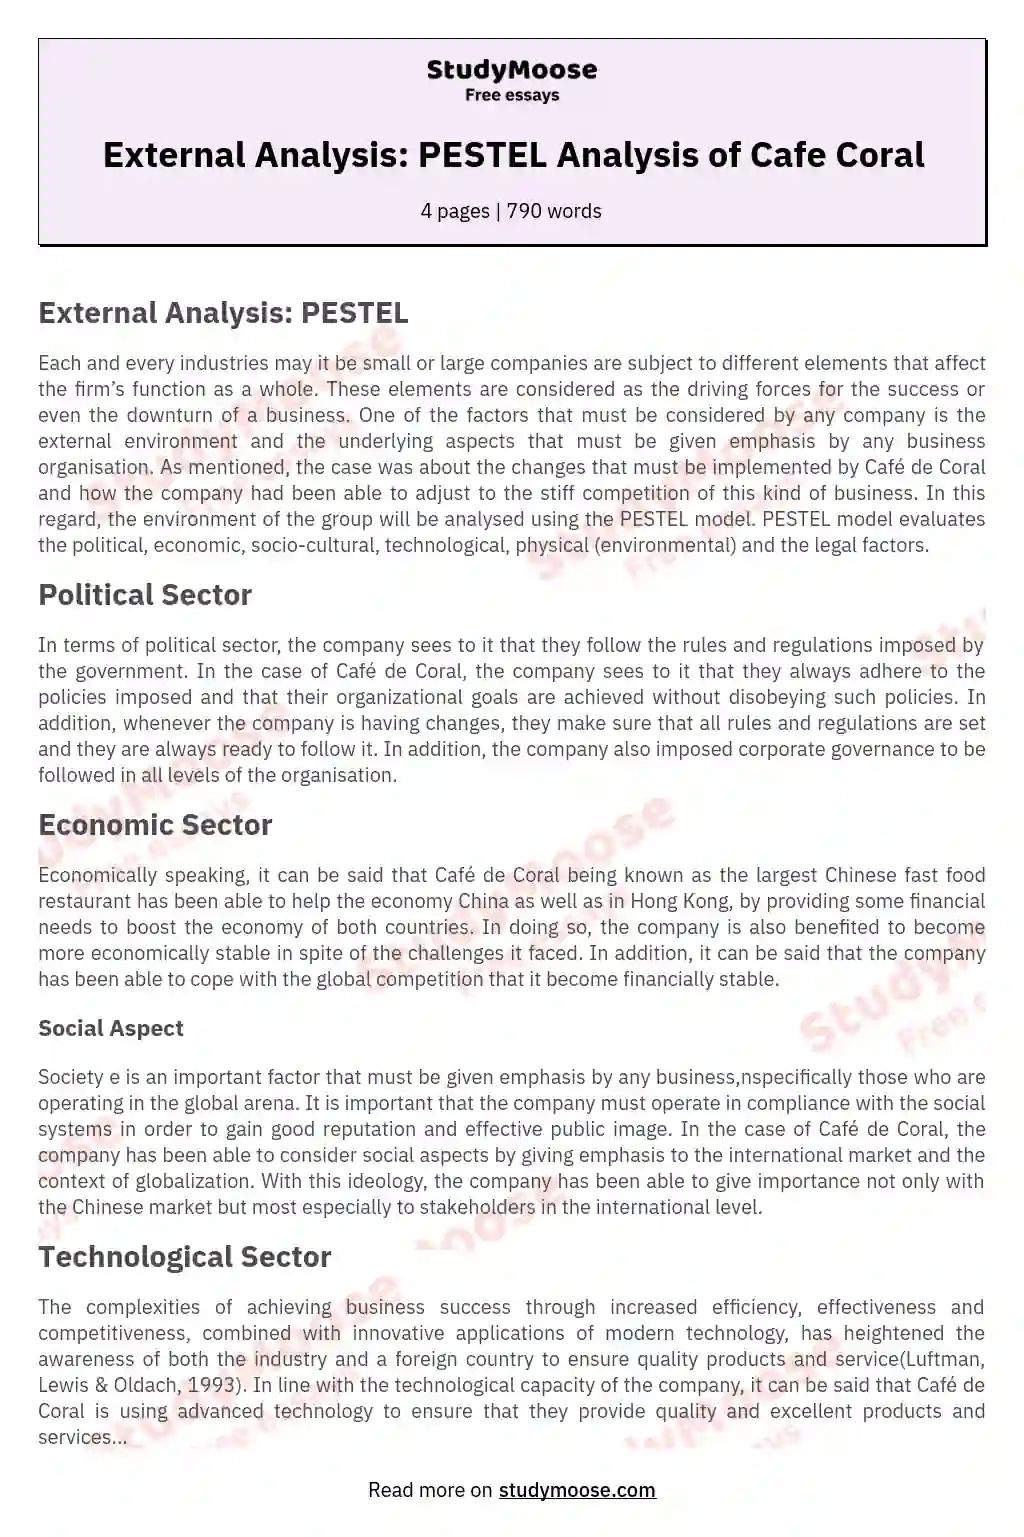 External Analysis: PESTEL Analysis of Cafe Coral essay